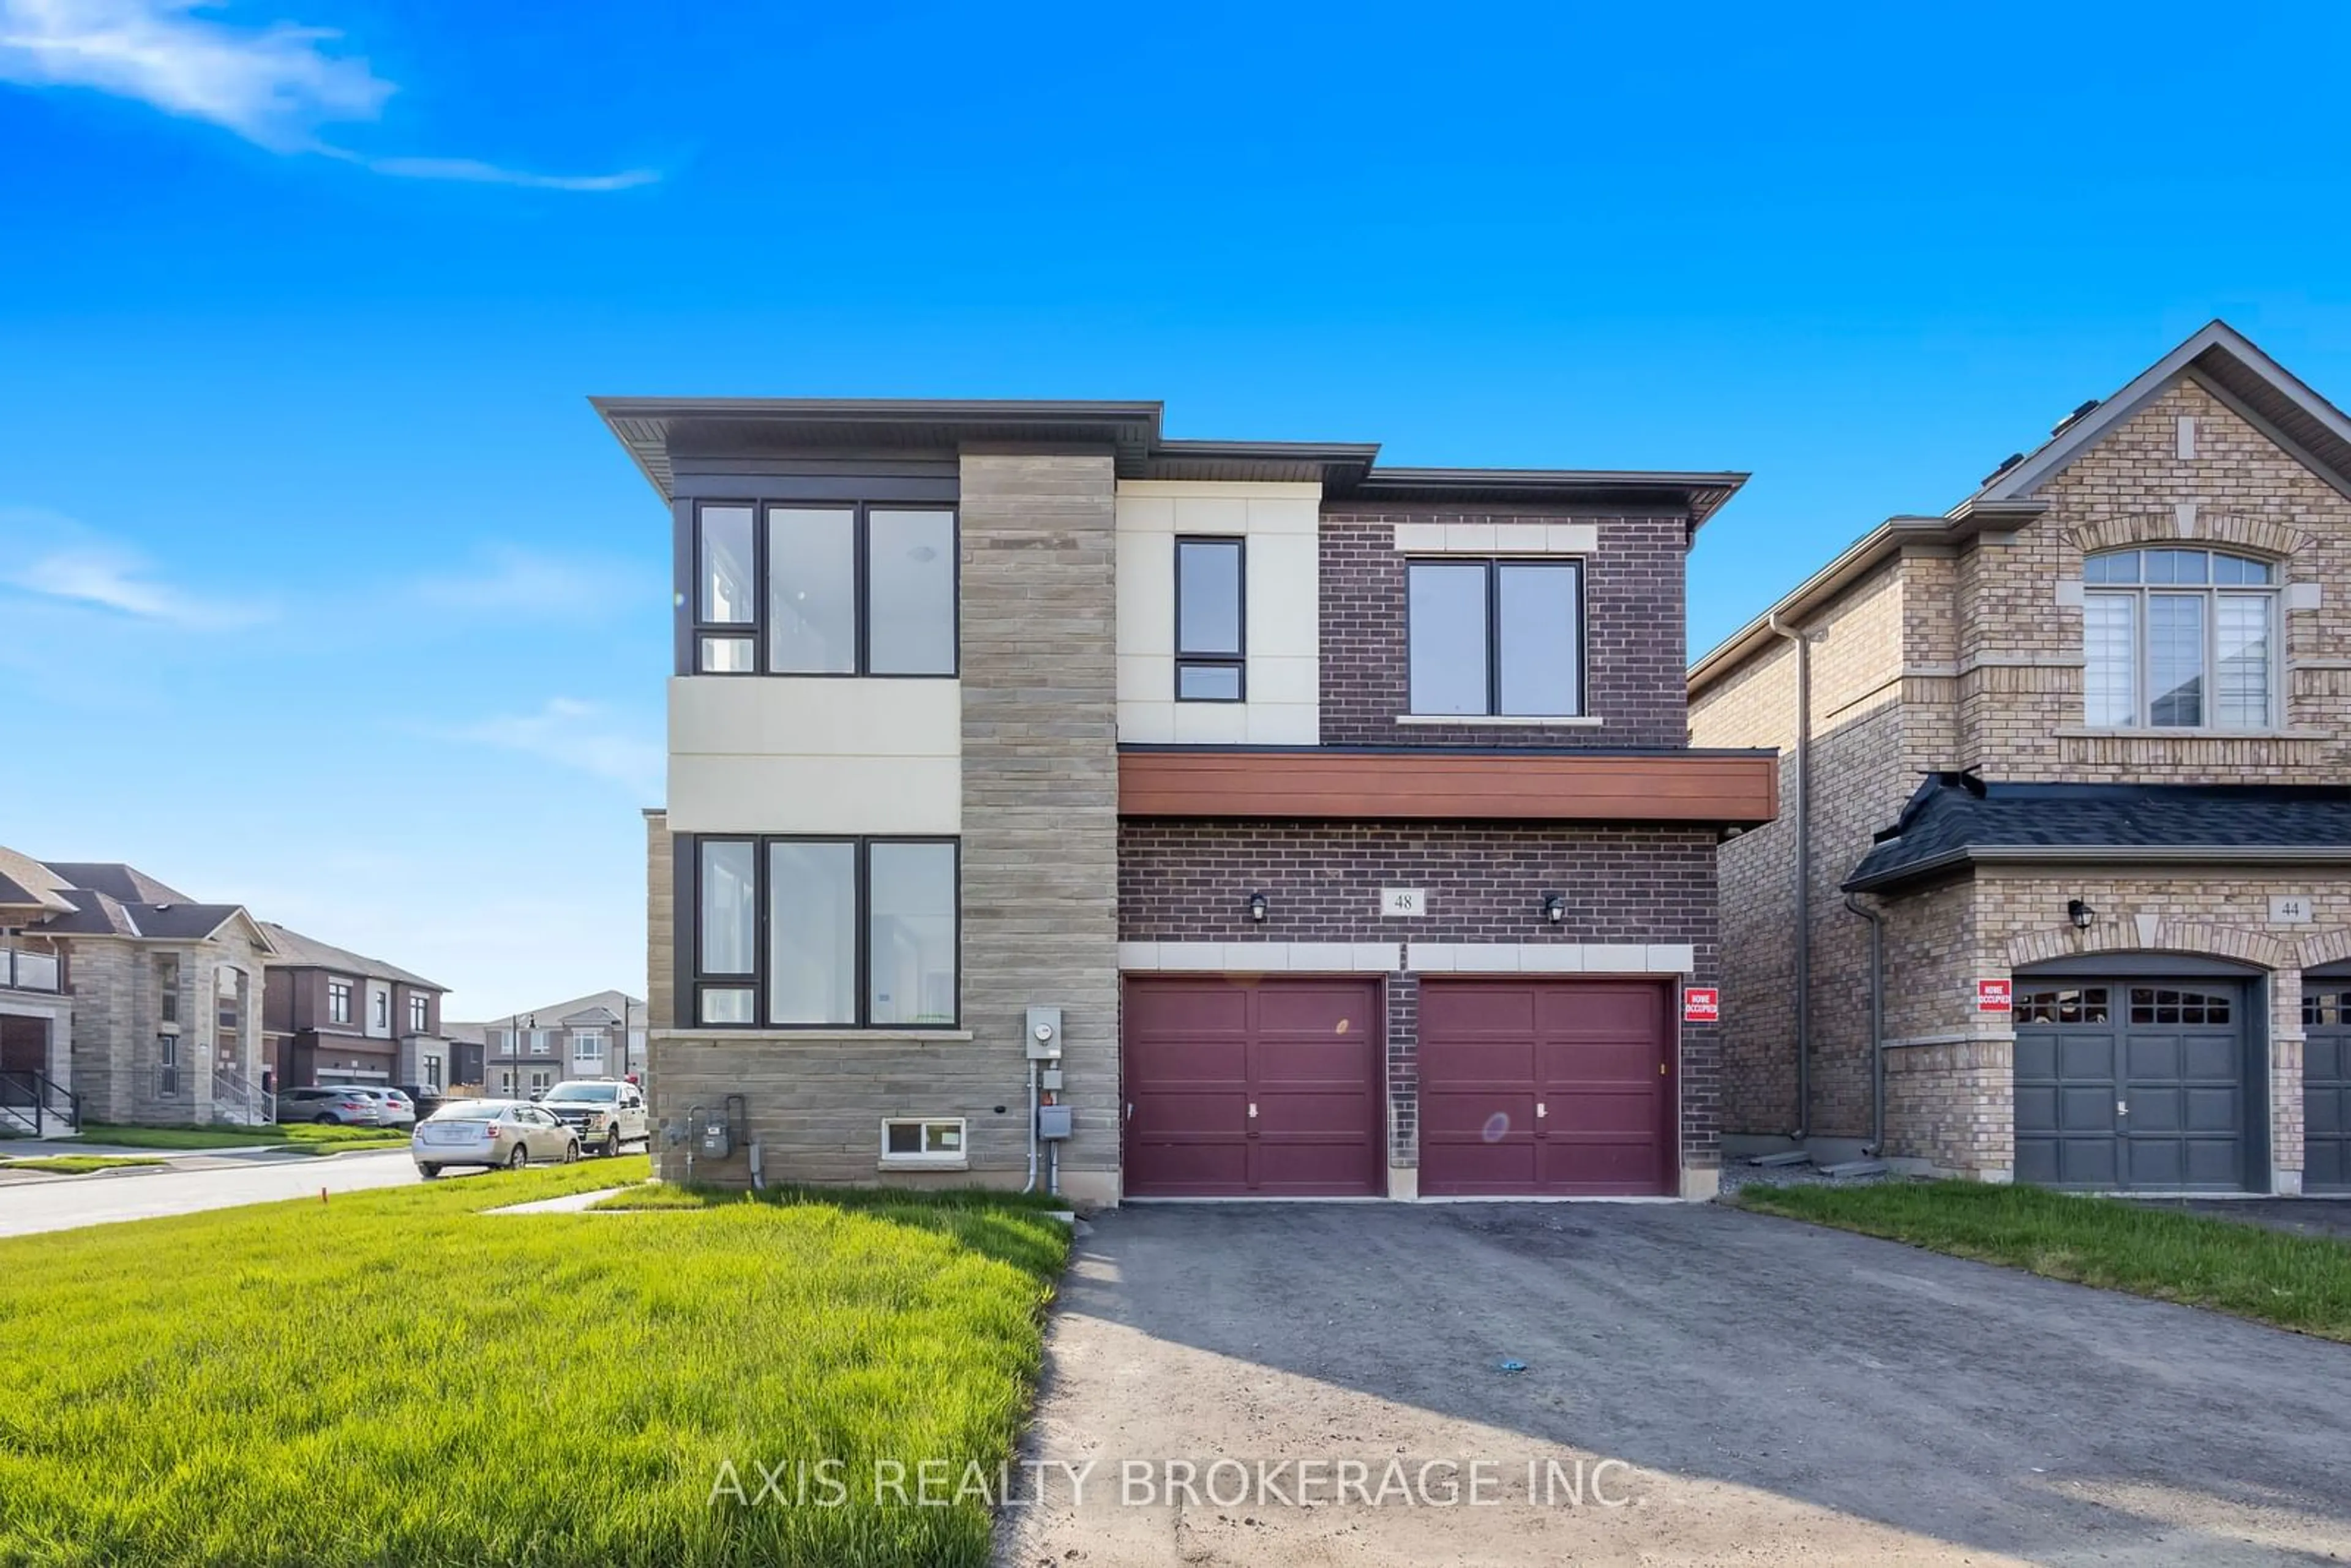 Home with brick exterior material for 48 Gardenbrook Tr, Hamilton Ontario L8B 1Z9